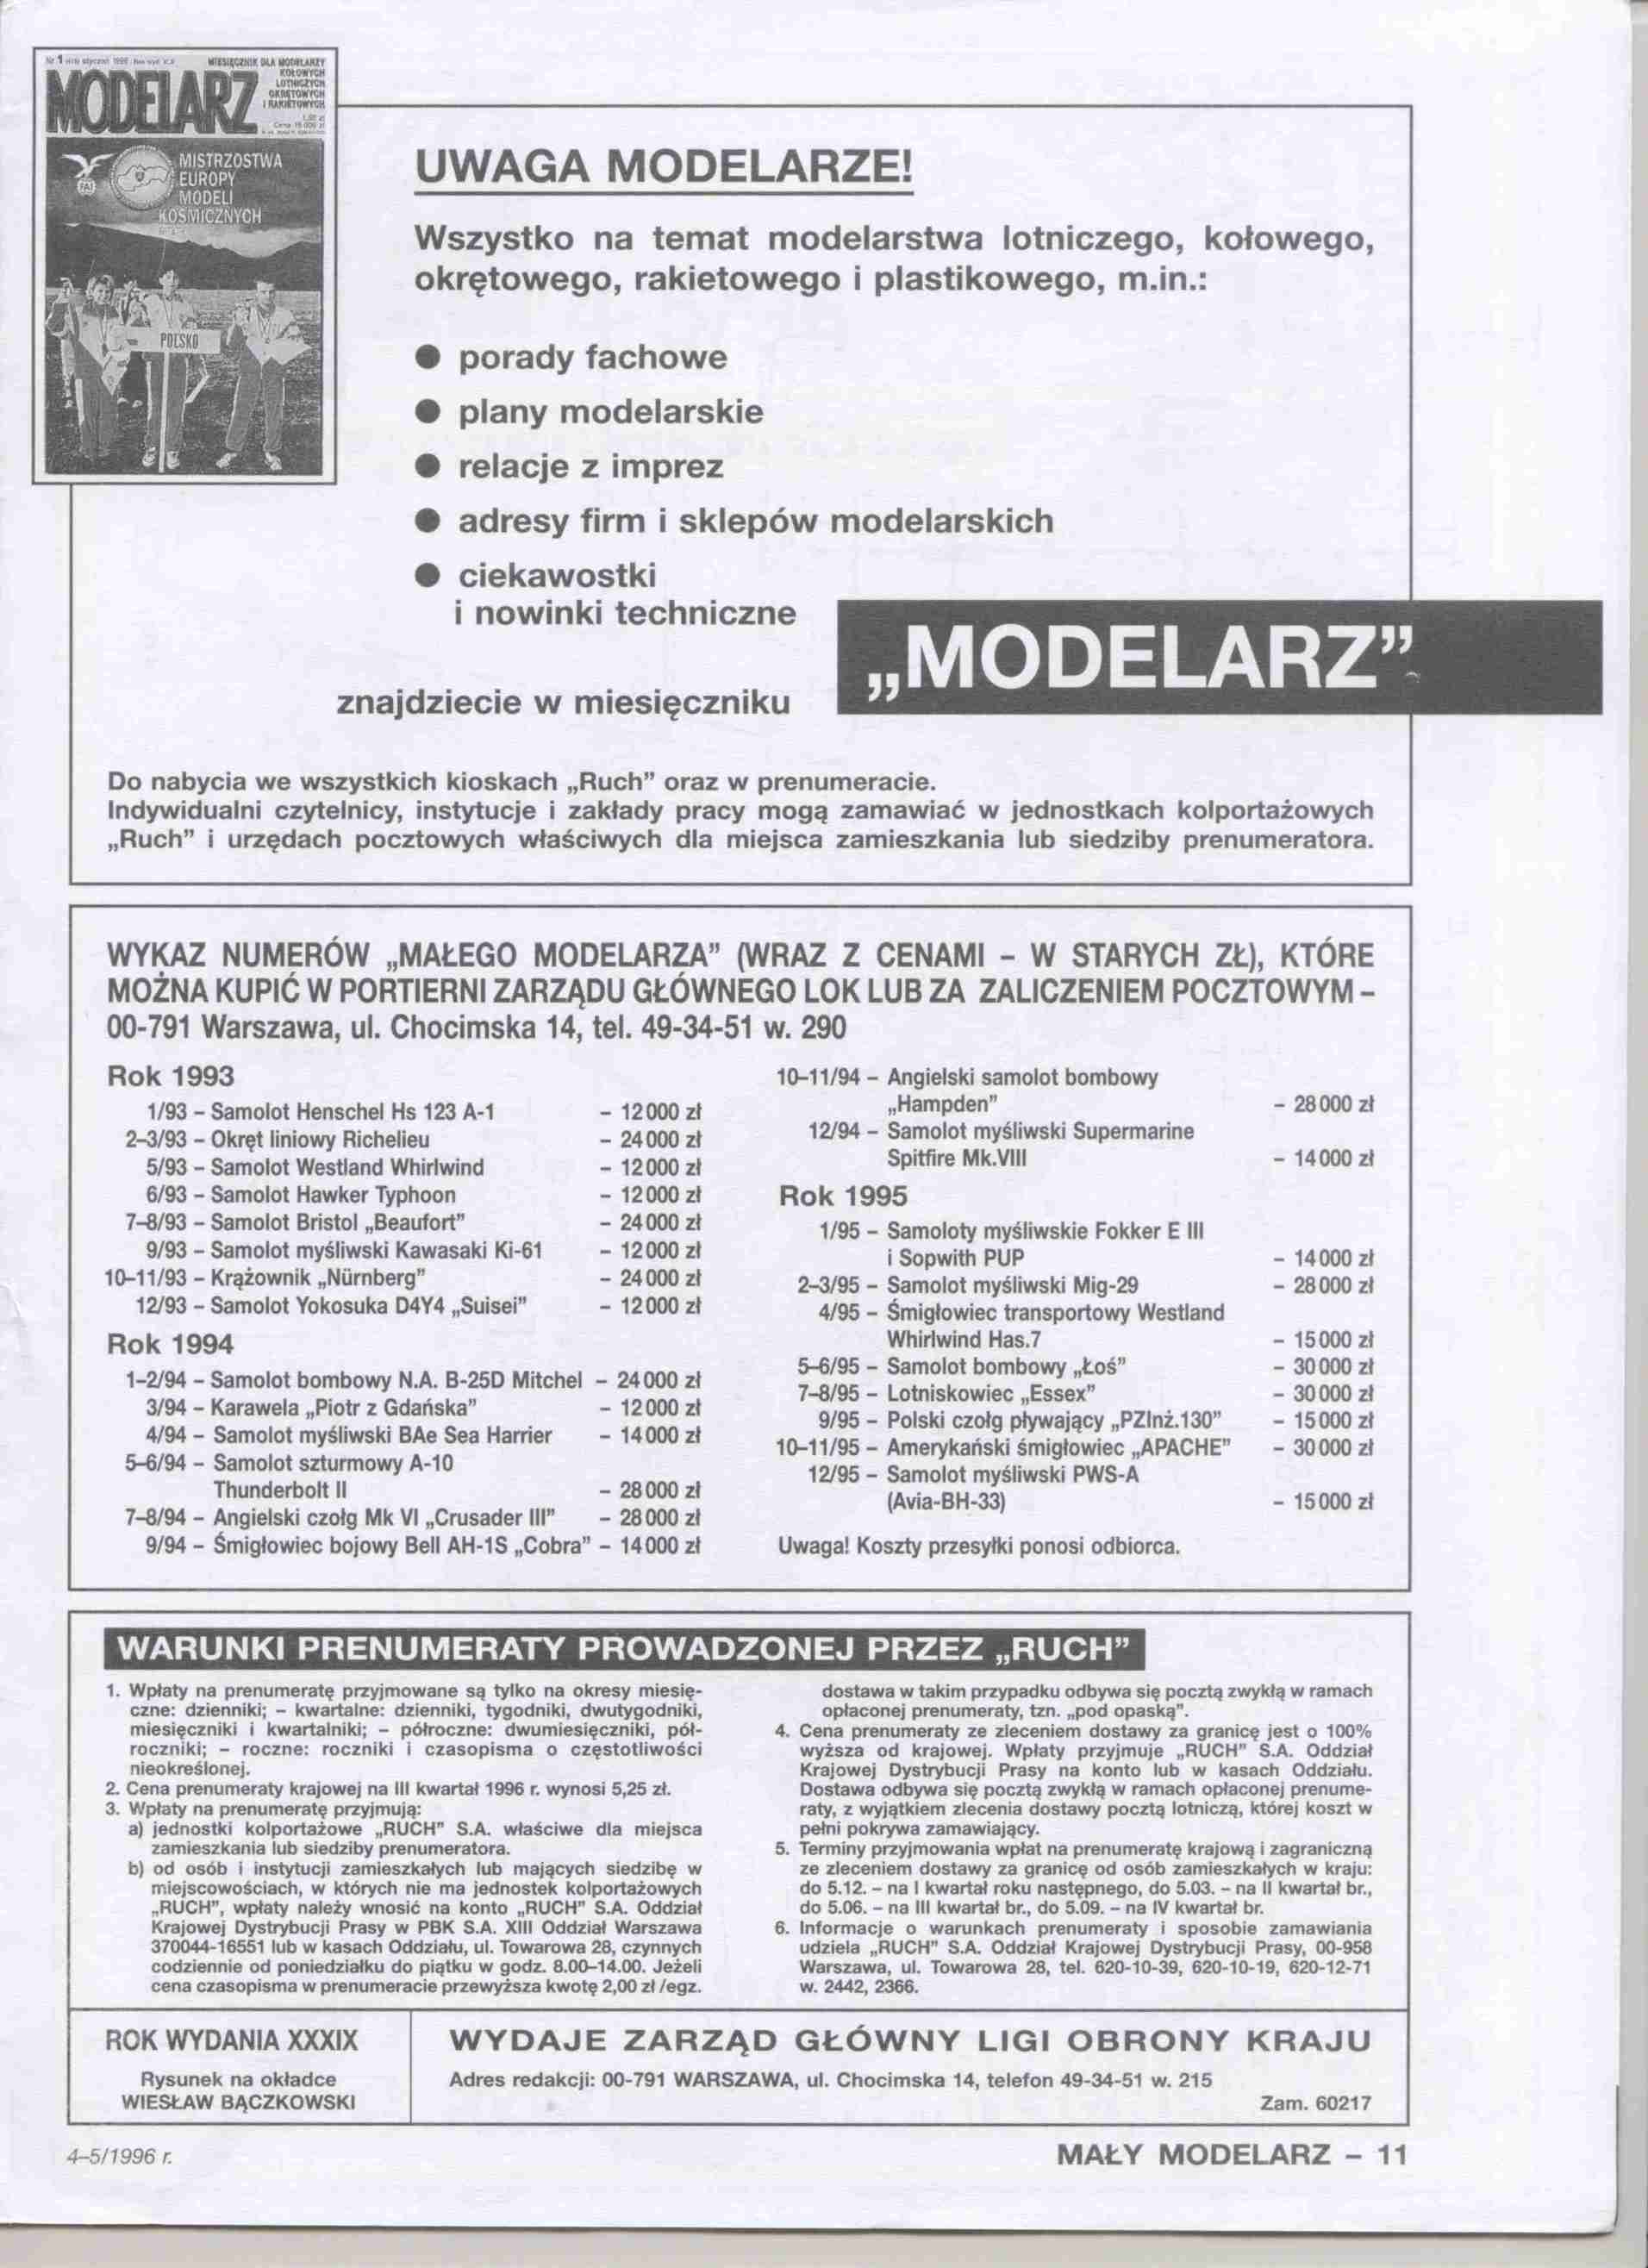 "Maly Modelarz" 4-5, 1996, 11 c.